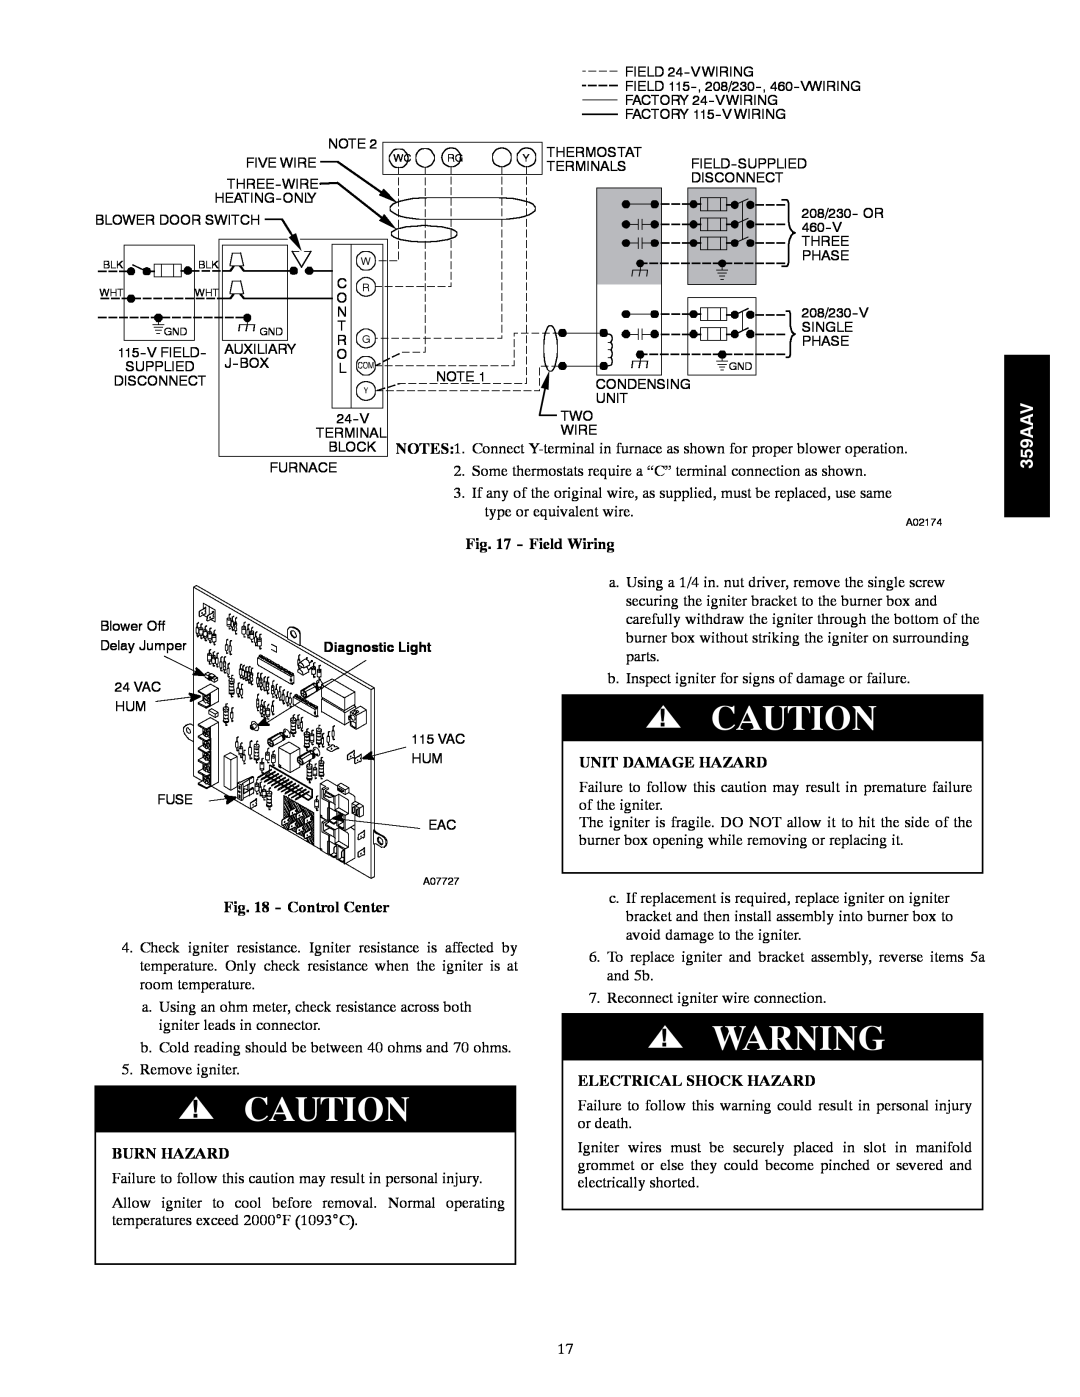 Bryant 359AAV instruction manual Field Wiring, Control Center, Burn Hazard, Unit Damage Hazard, Electrical Shock Hazard 